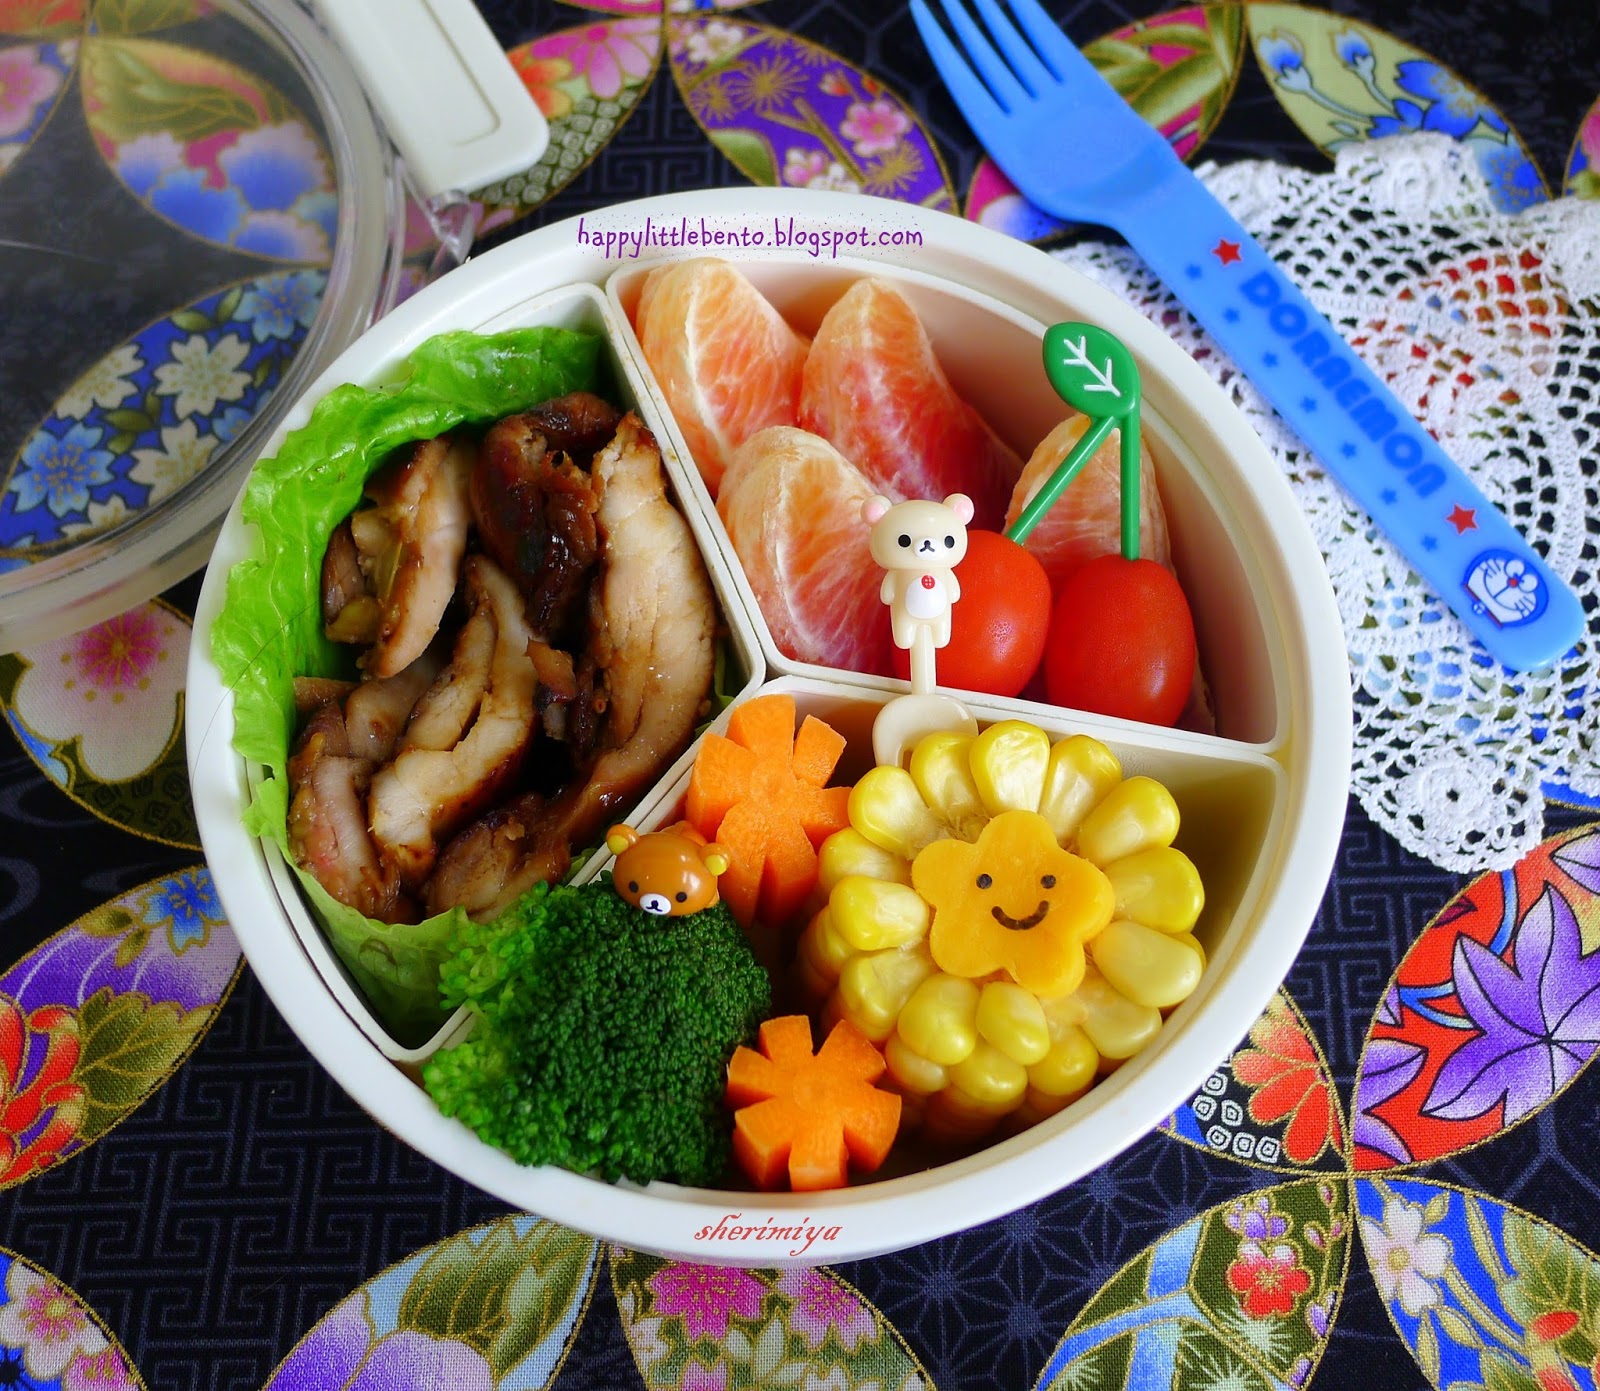 Bento Box Lunch Ideas: 20 Recipe Round-Up